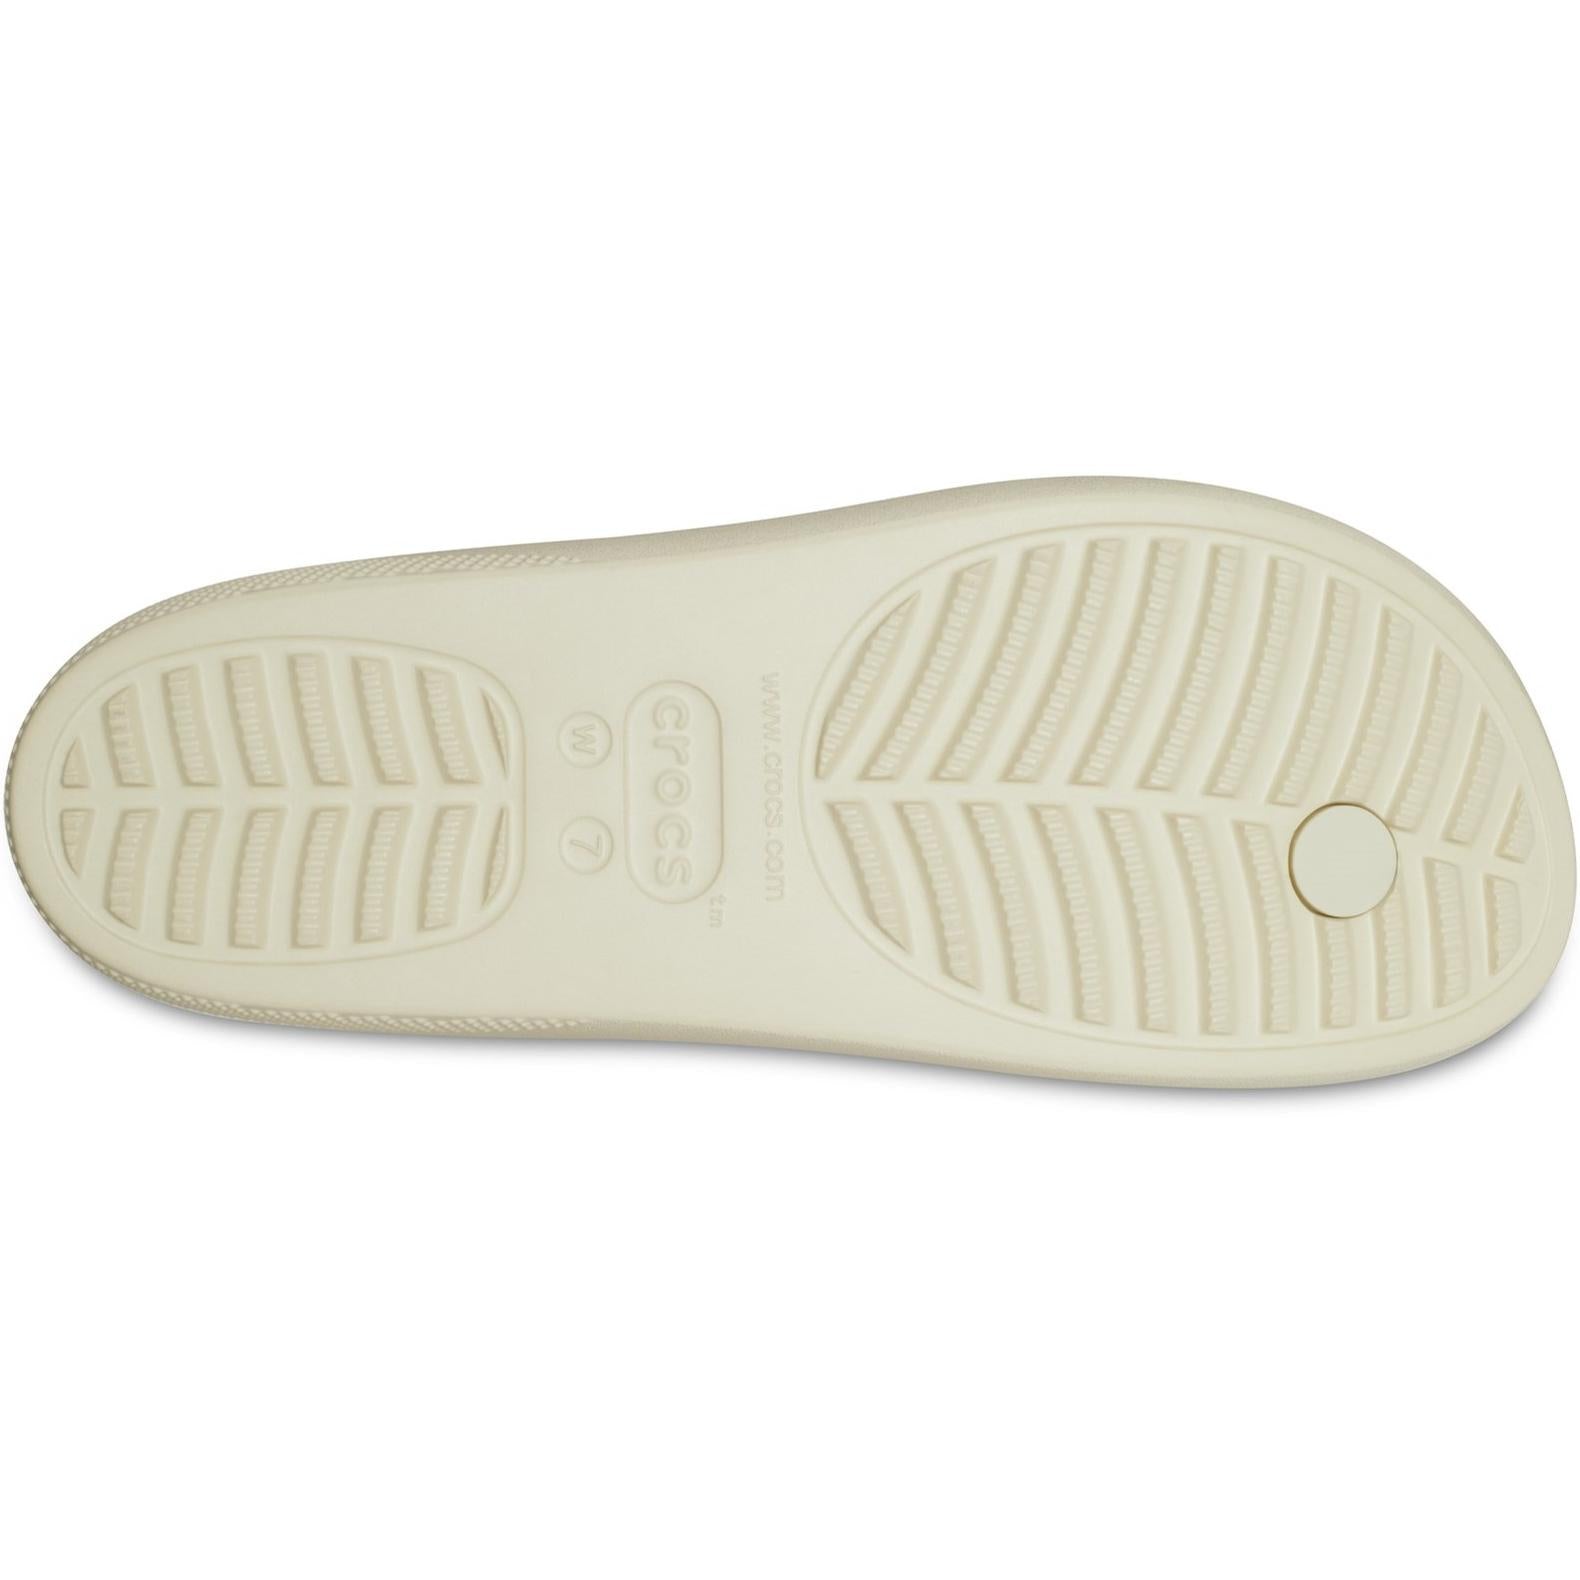 Crocs Classic Summer Nostalgia Platform Flip Flop Sandals